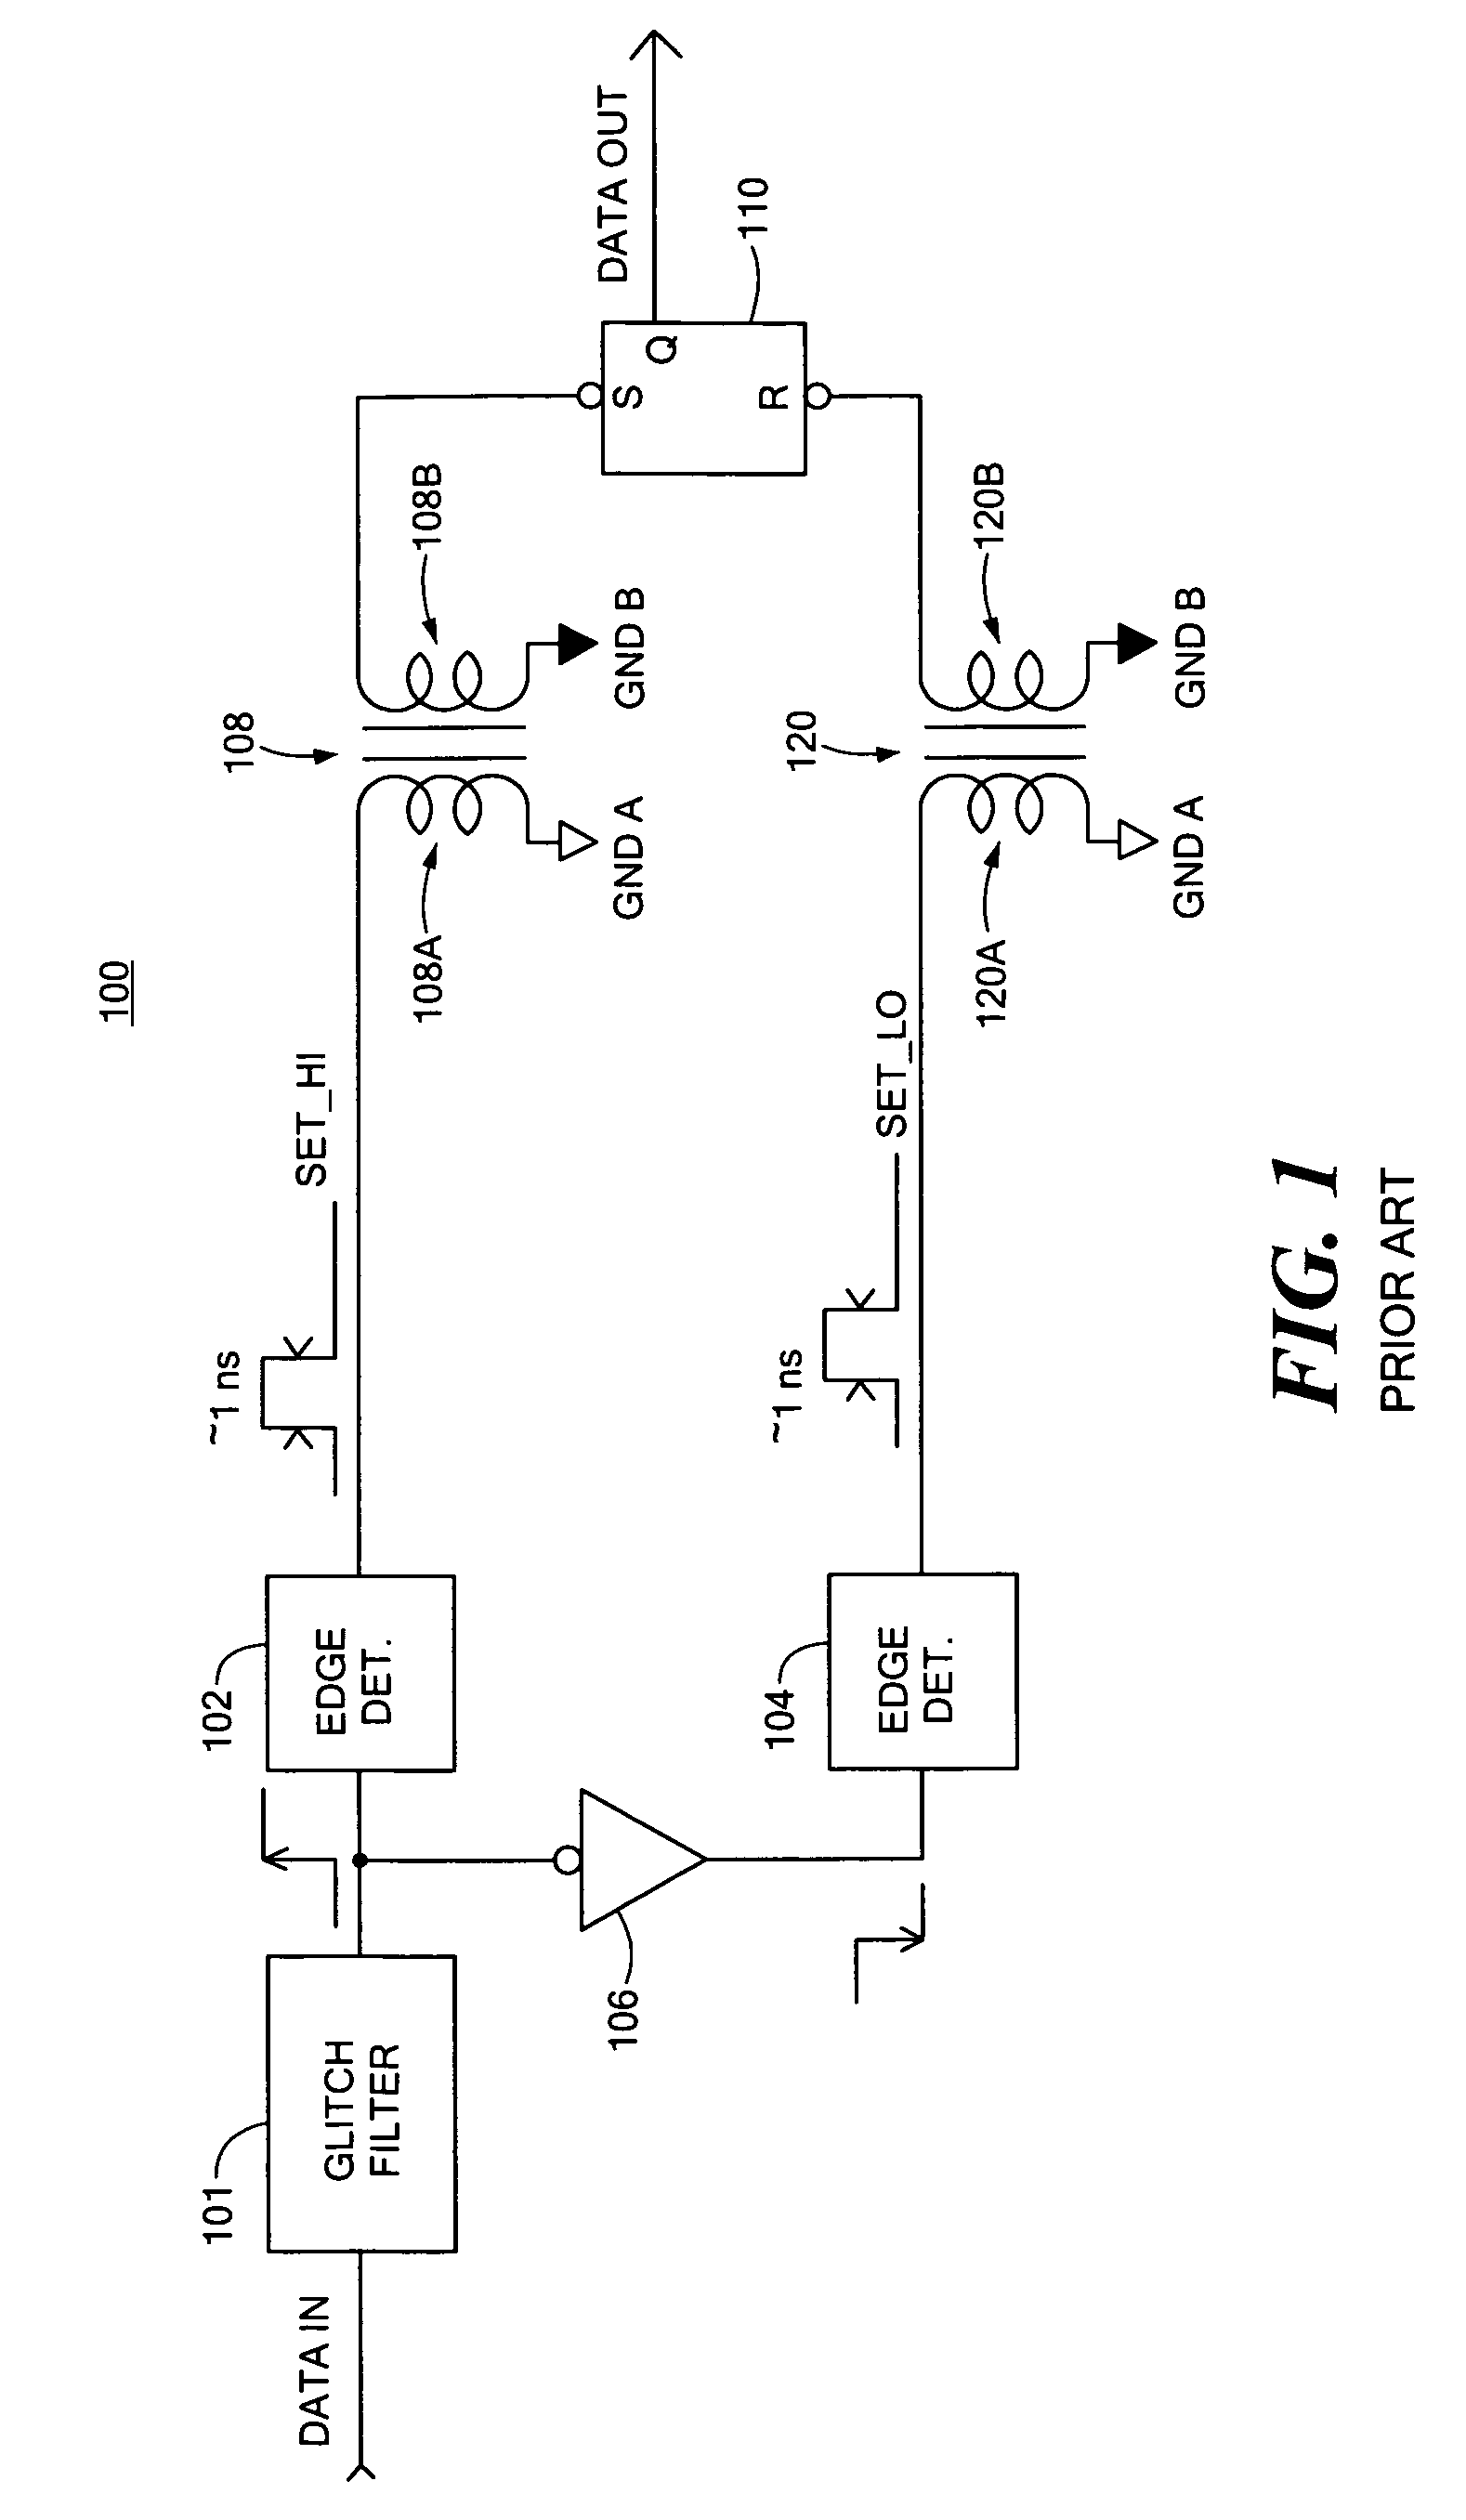 Signal isolator using micro-transformers